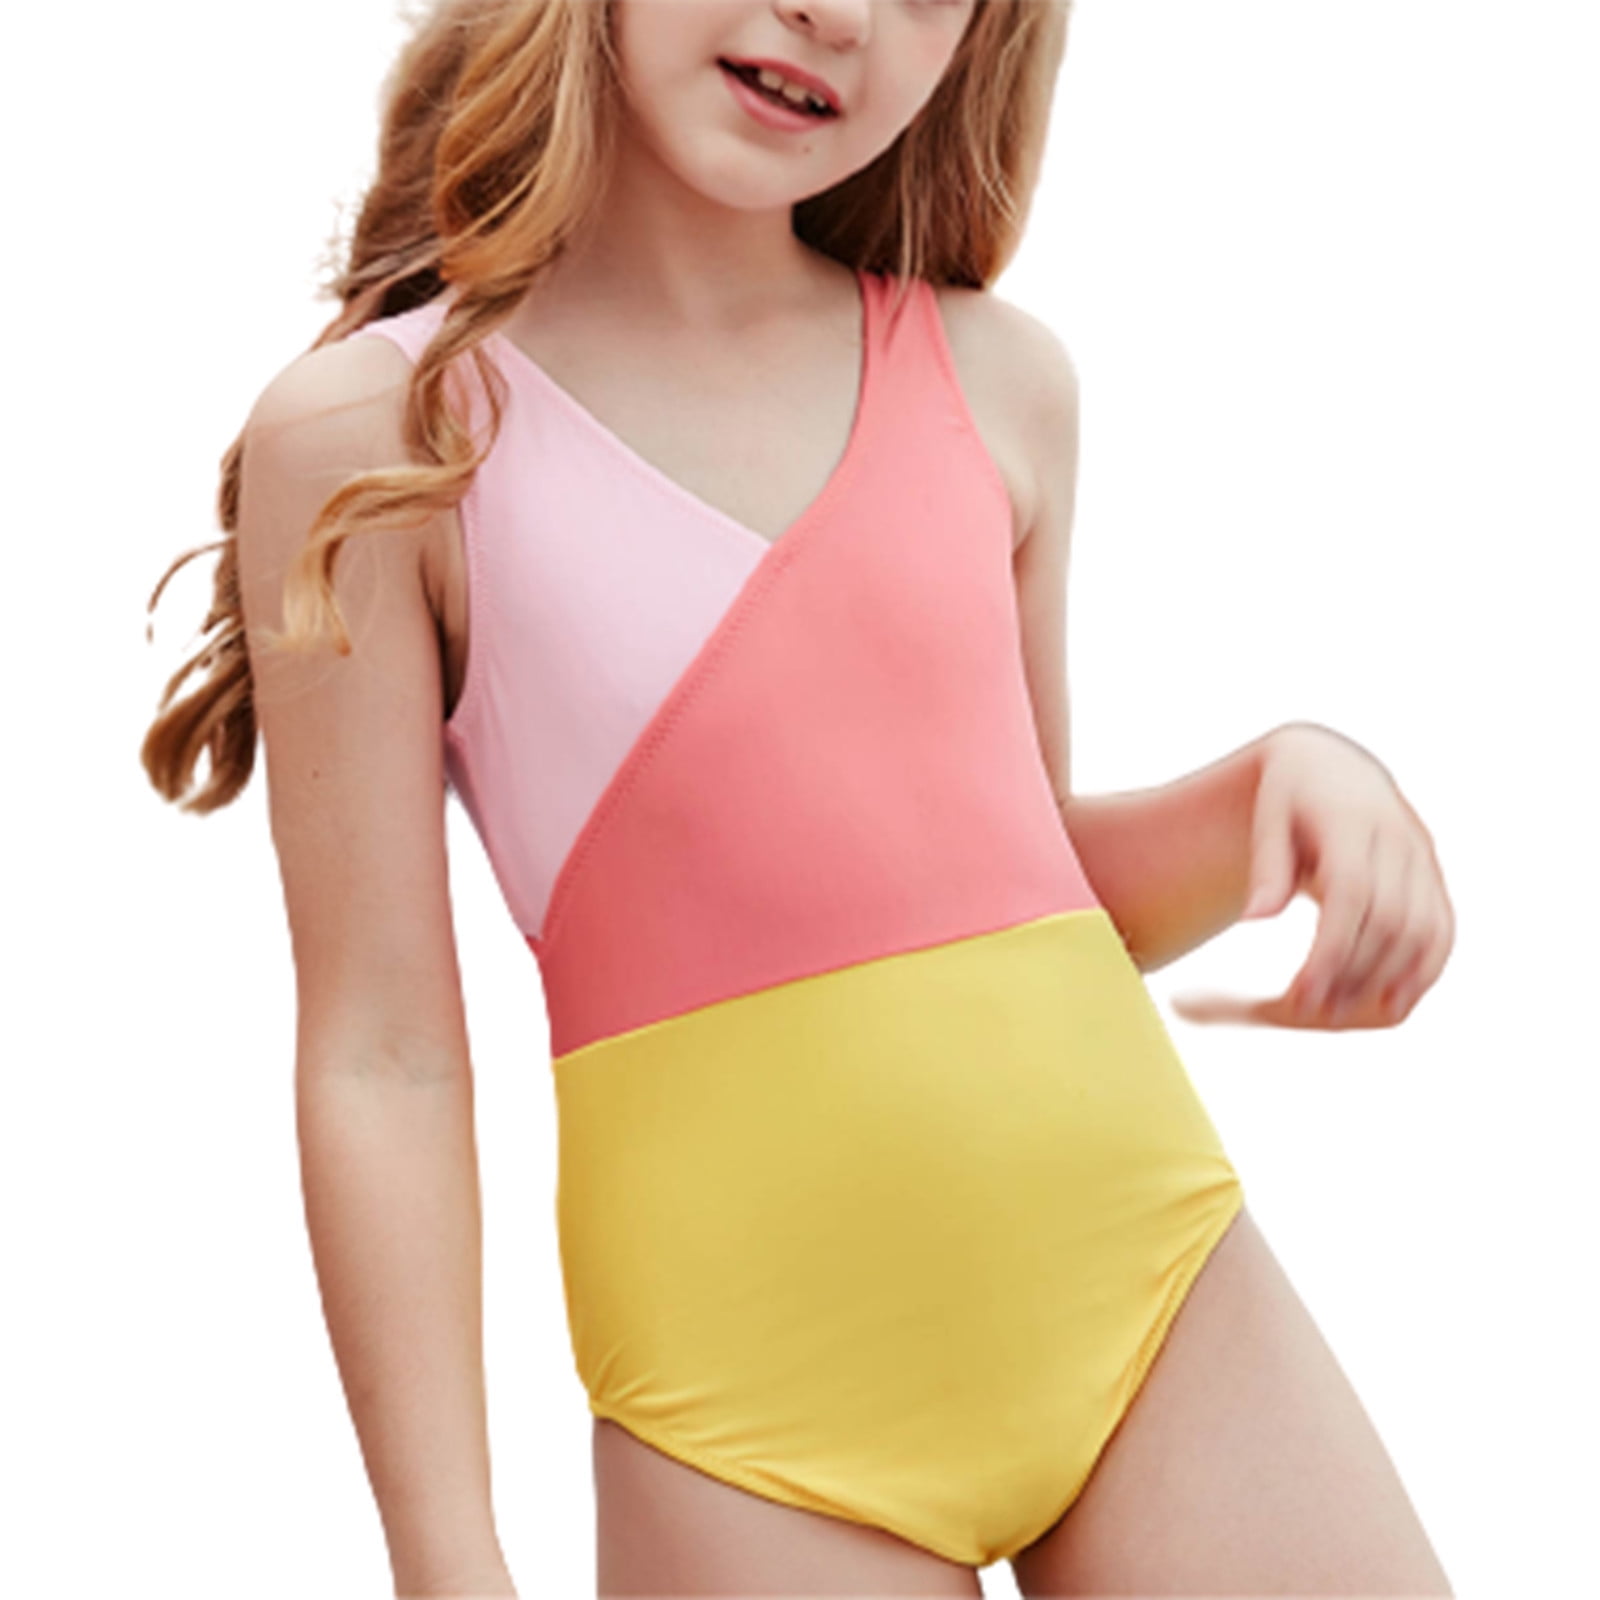 KaLI_store Girls Swimsuits Girl Bikini Swimsuit 2 Piece Bathing Suit Halter  Top Bikini Bottoms Swimming Suit,Pink